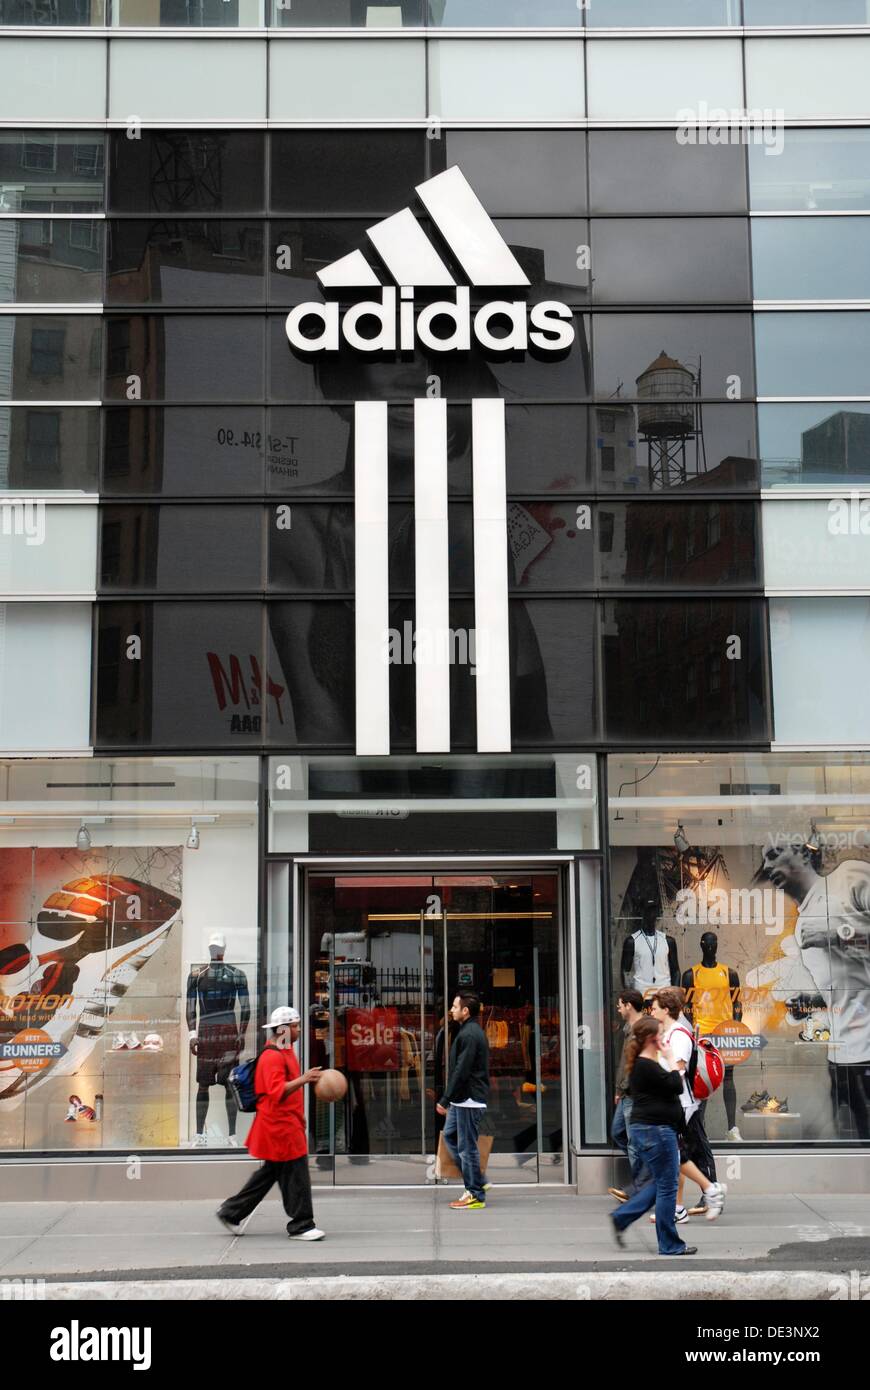 Adidas store in Manhattan Stock Photo - Alamy